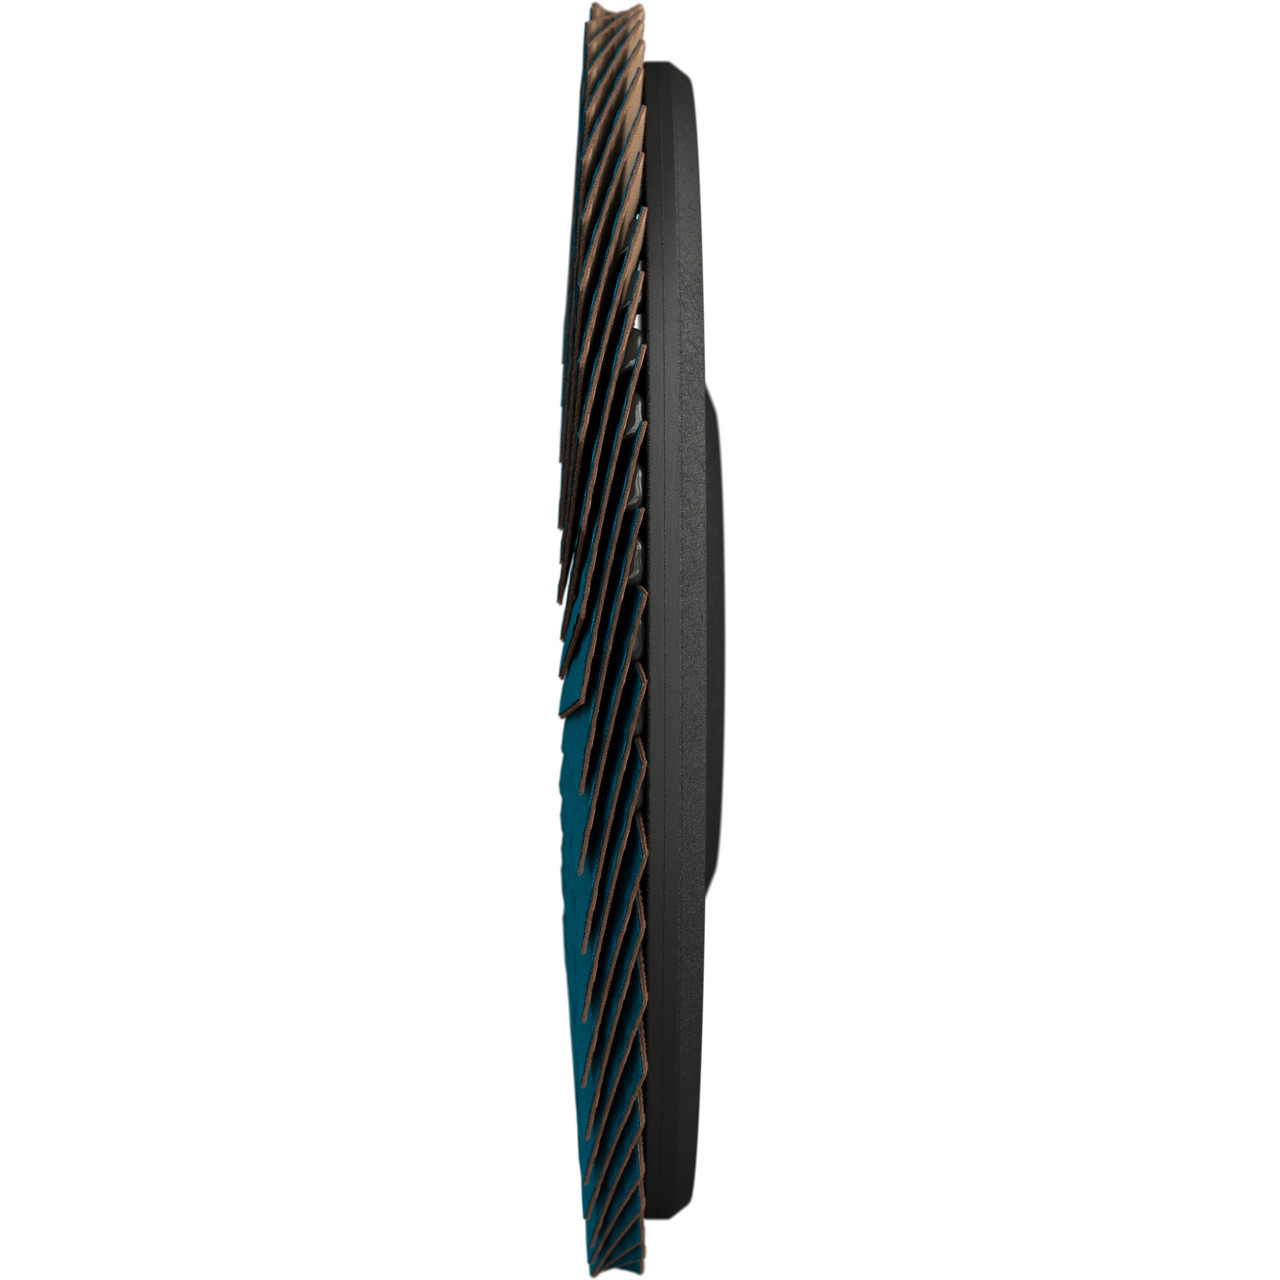 TYROLIT Fächerscheibe DxH 115x22,23 LONGLIFE für Stahl, P80, Form: 28N - gerade Ausführung (Kunststoffträgerkörper), Art. 34063396